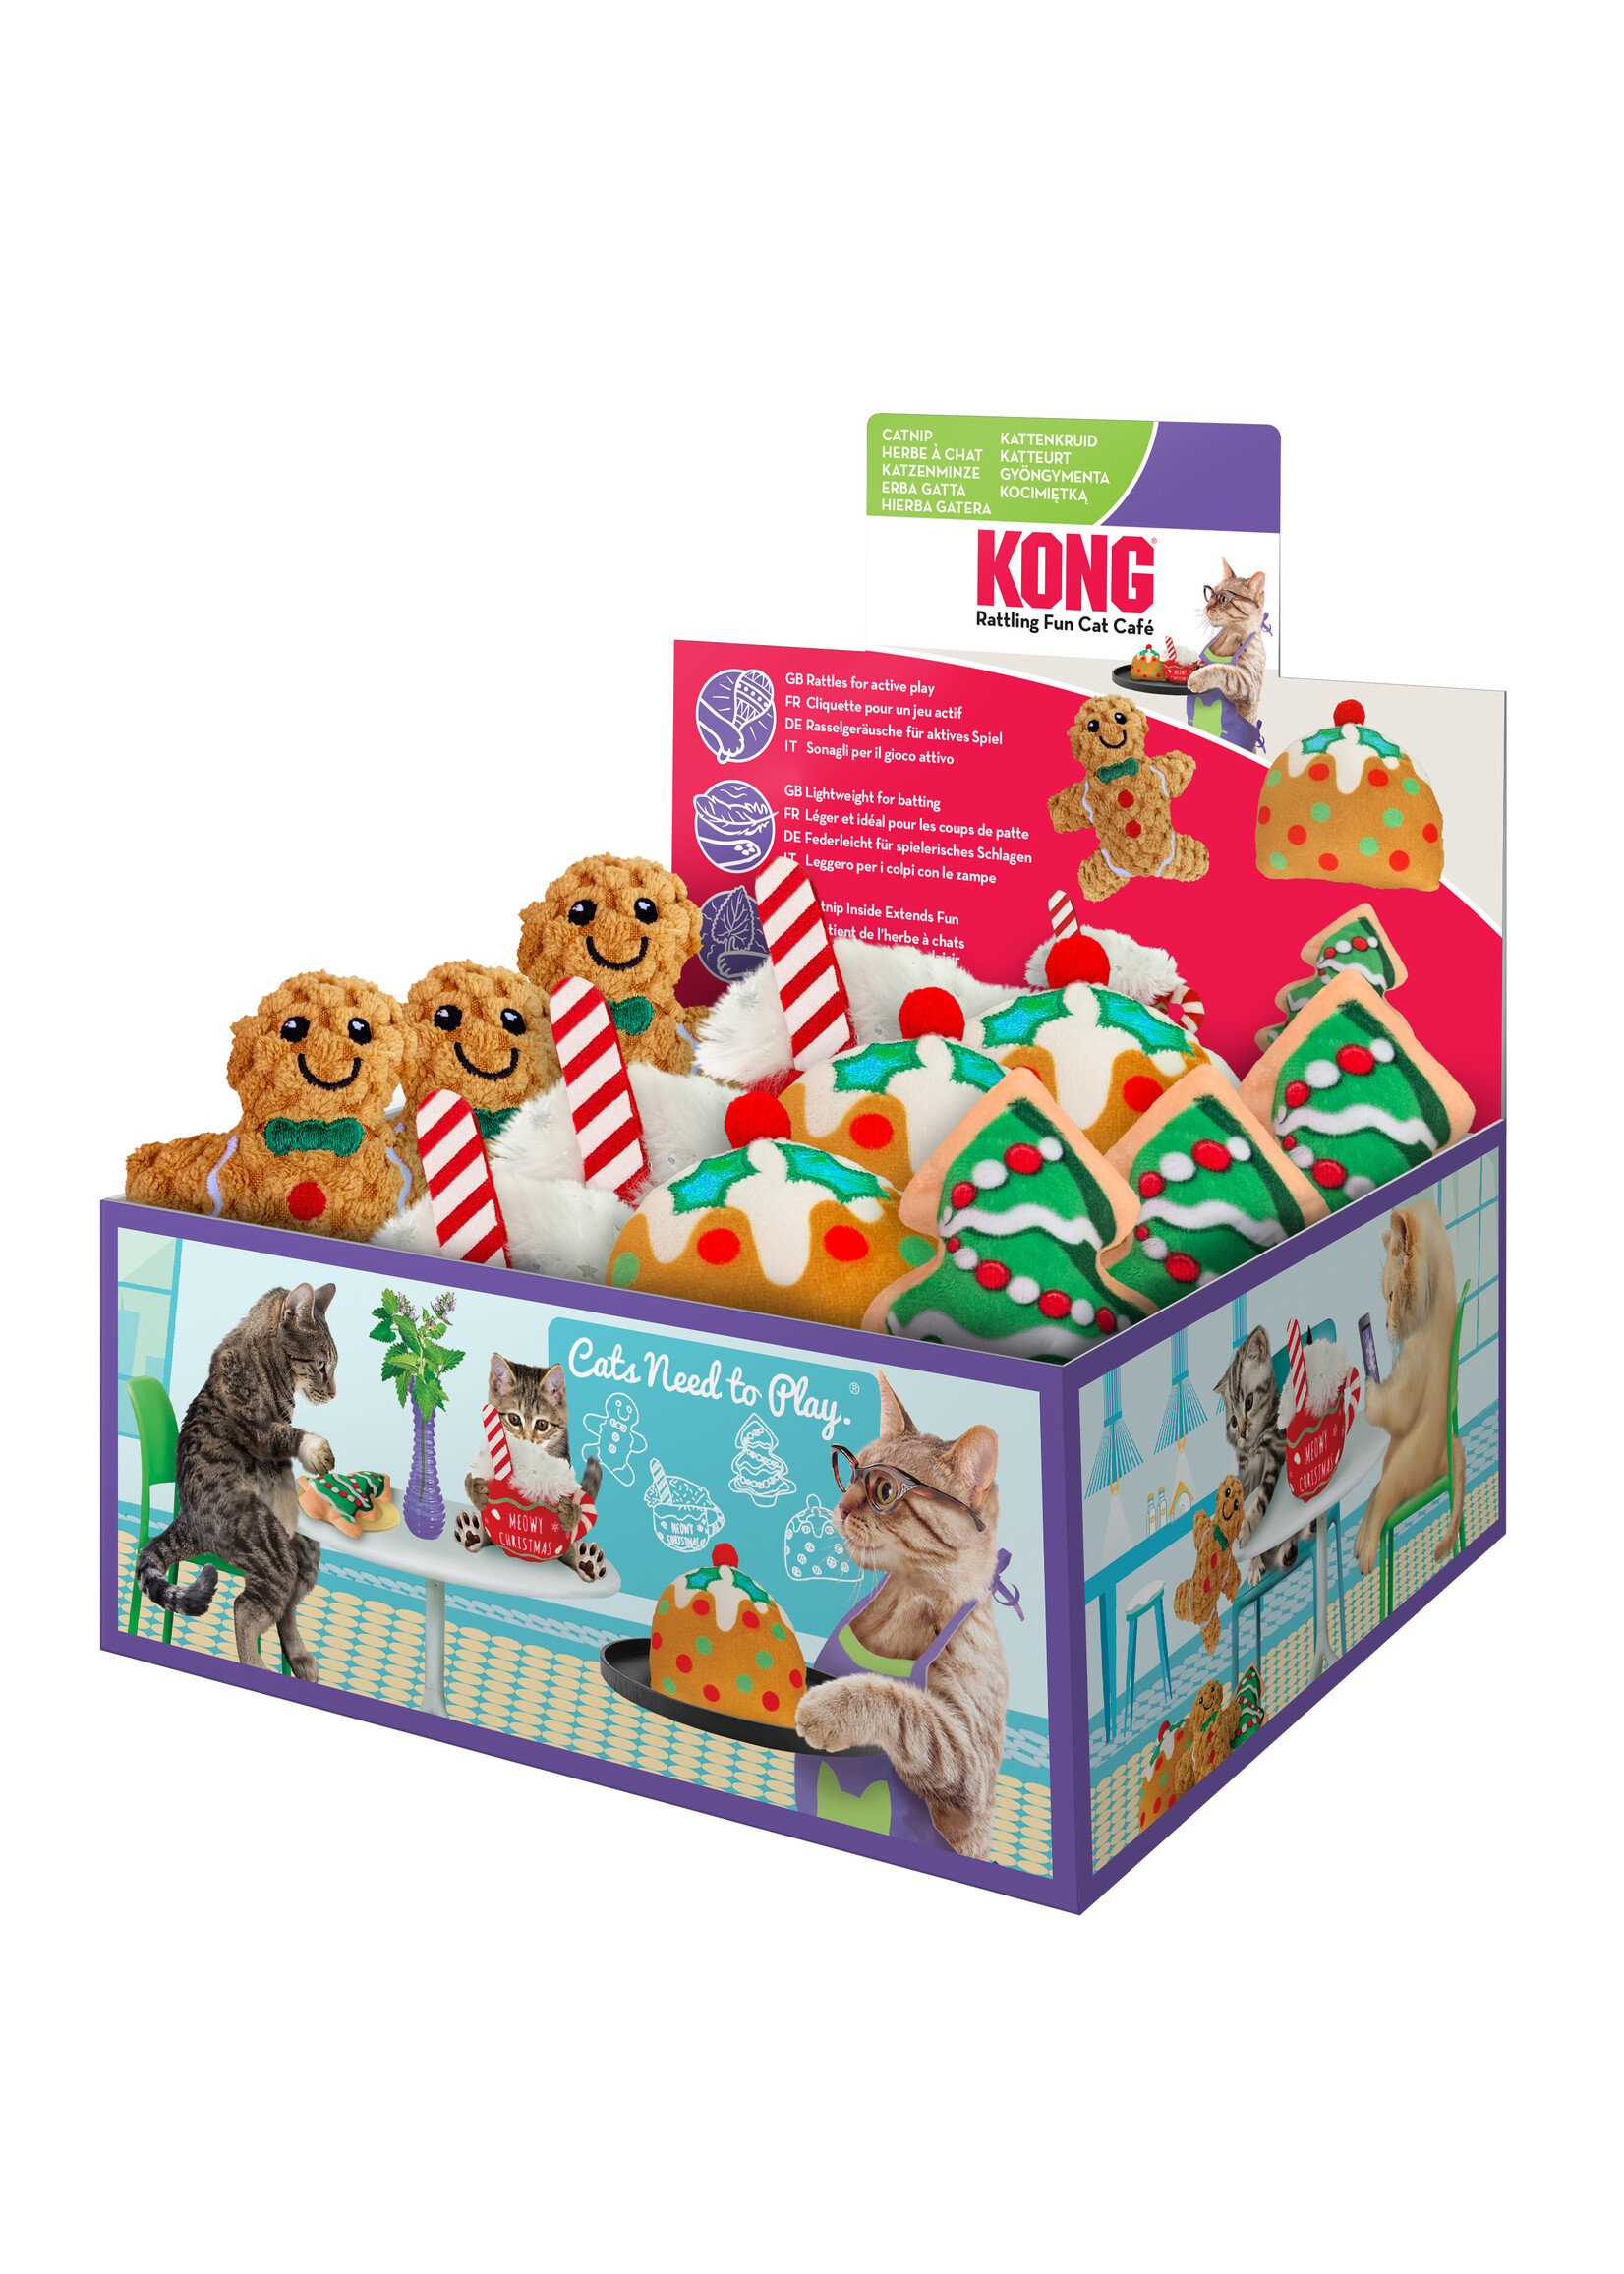 Kong Kong Holiday Scrattles Cafe Assorted